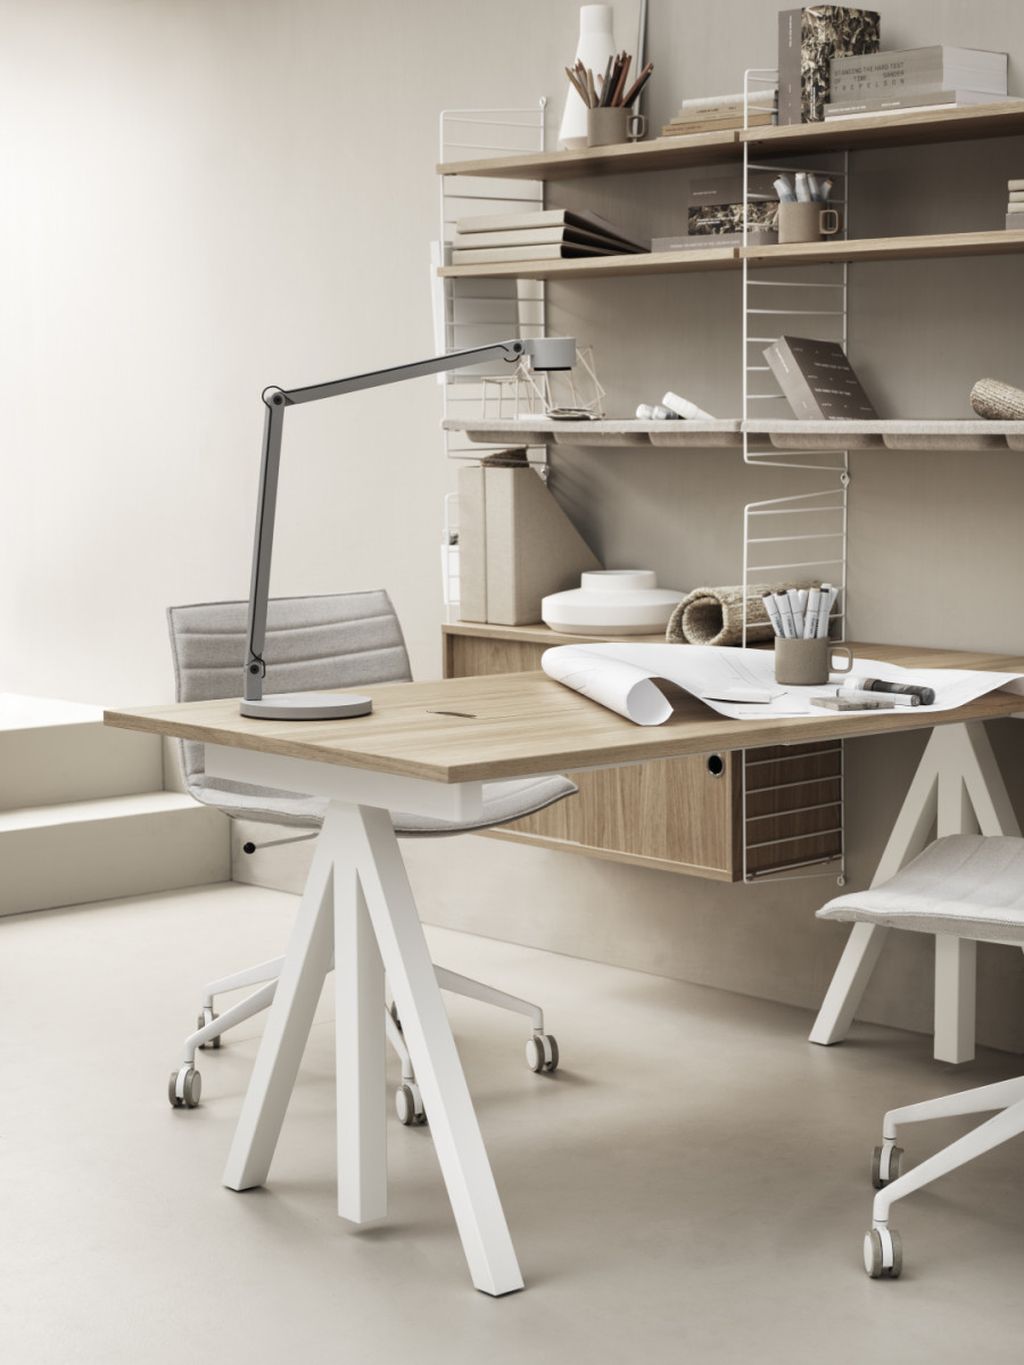 String Furniture Fungerar arbetsbord ek, 78x160 cm